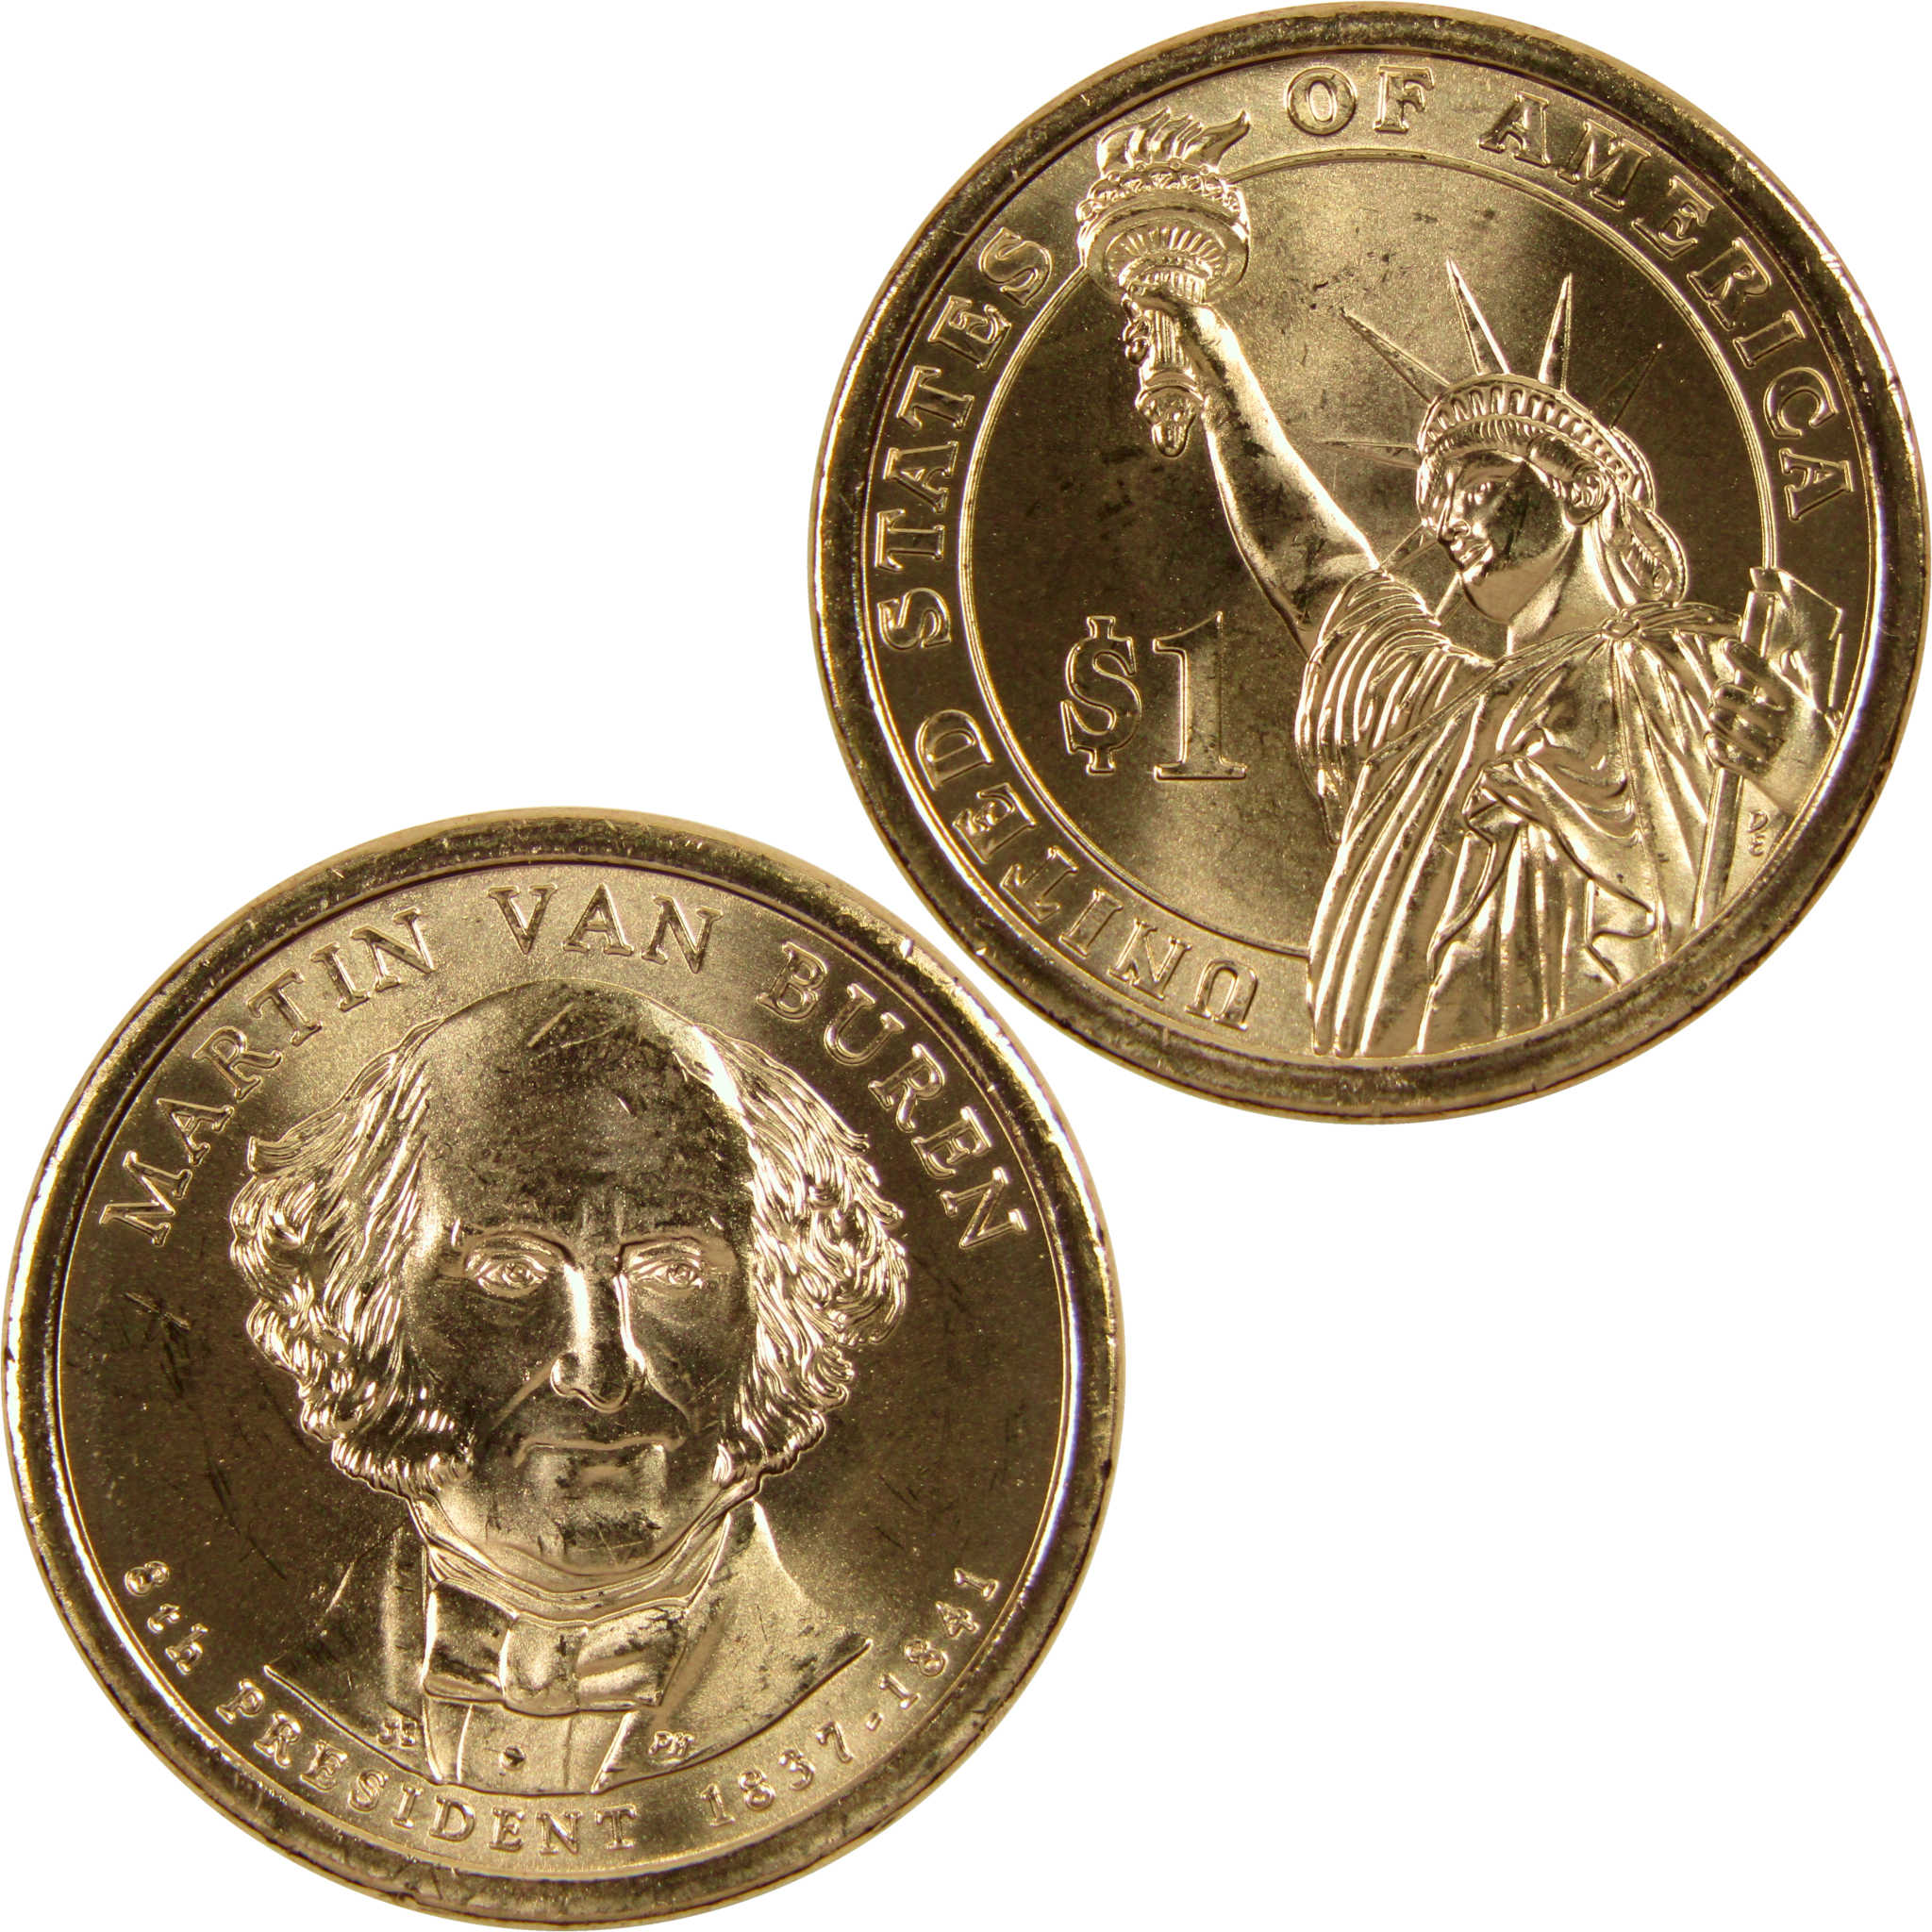 2008 P Martin Van Buren Presidential Dollar BU Uncirculated $1 Coin